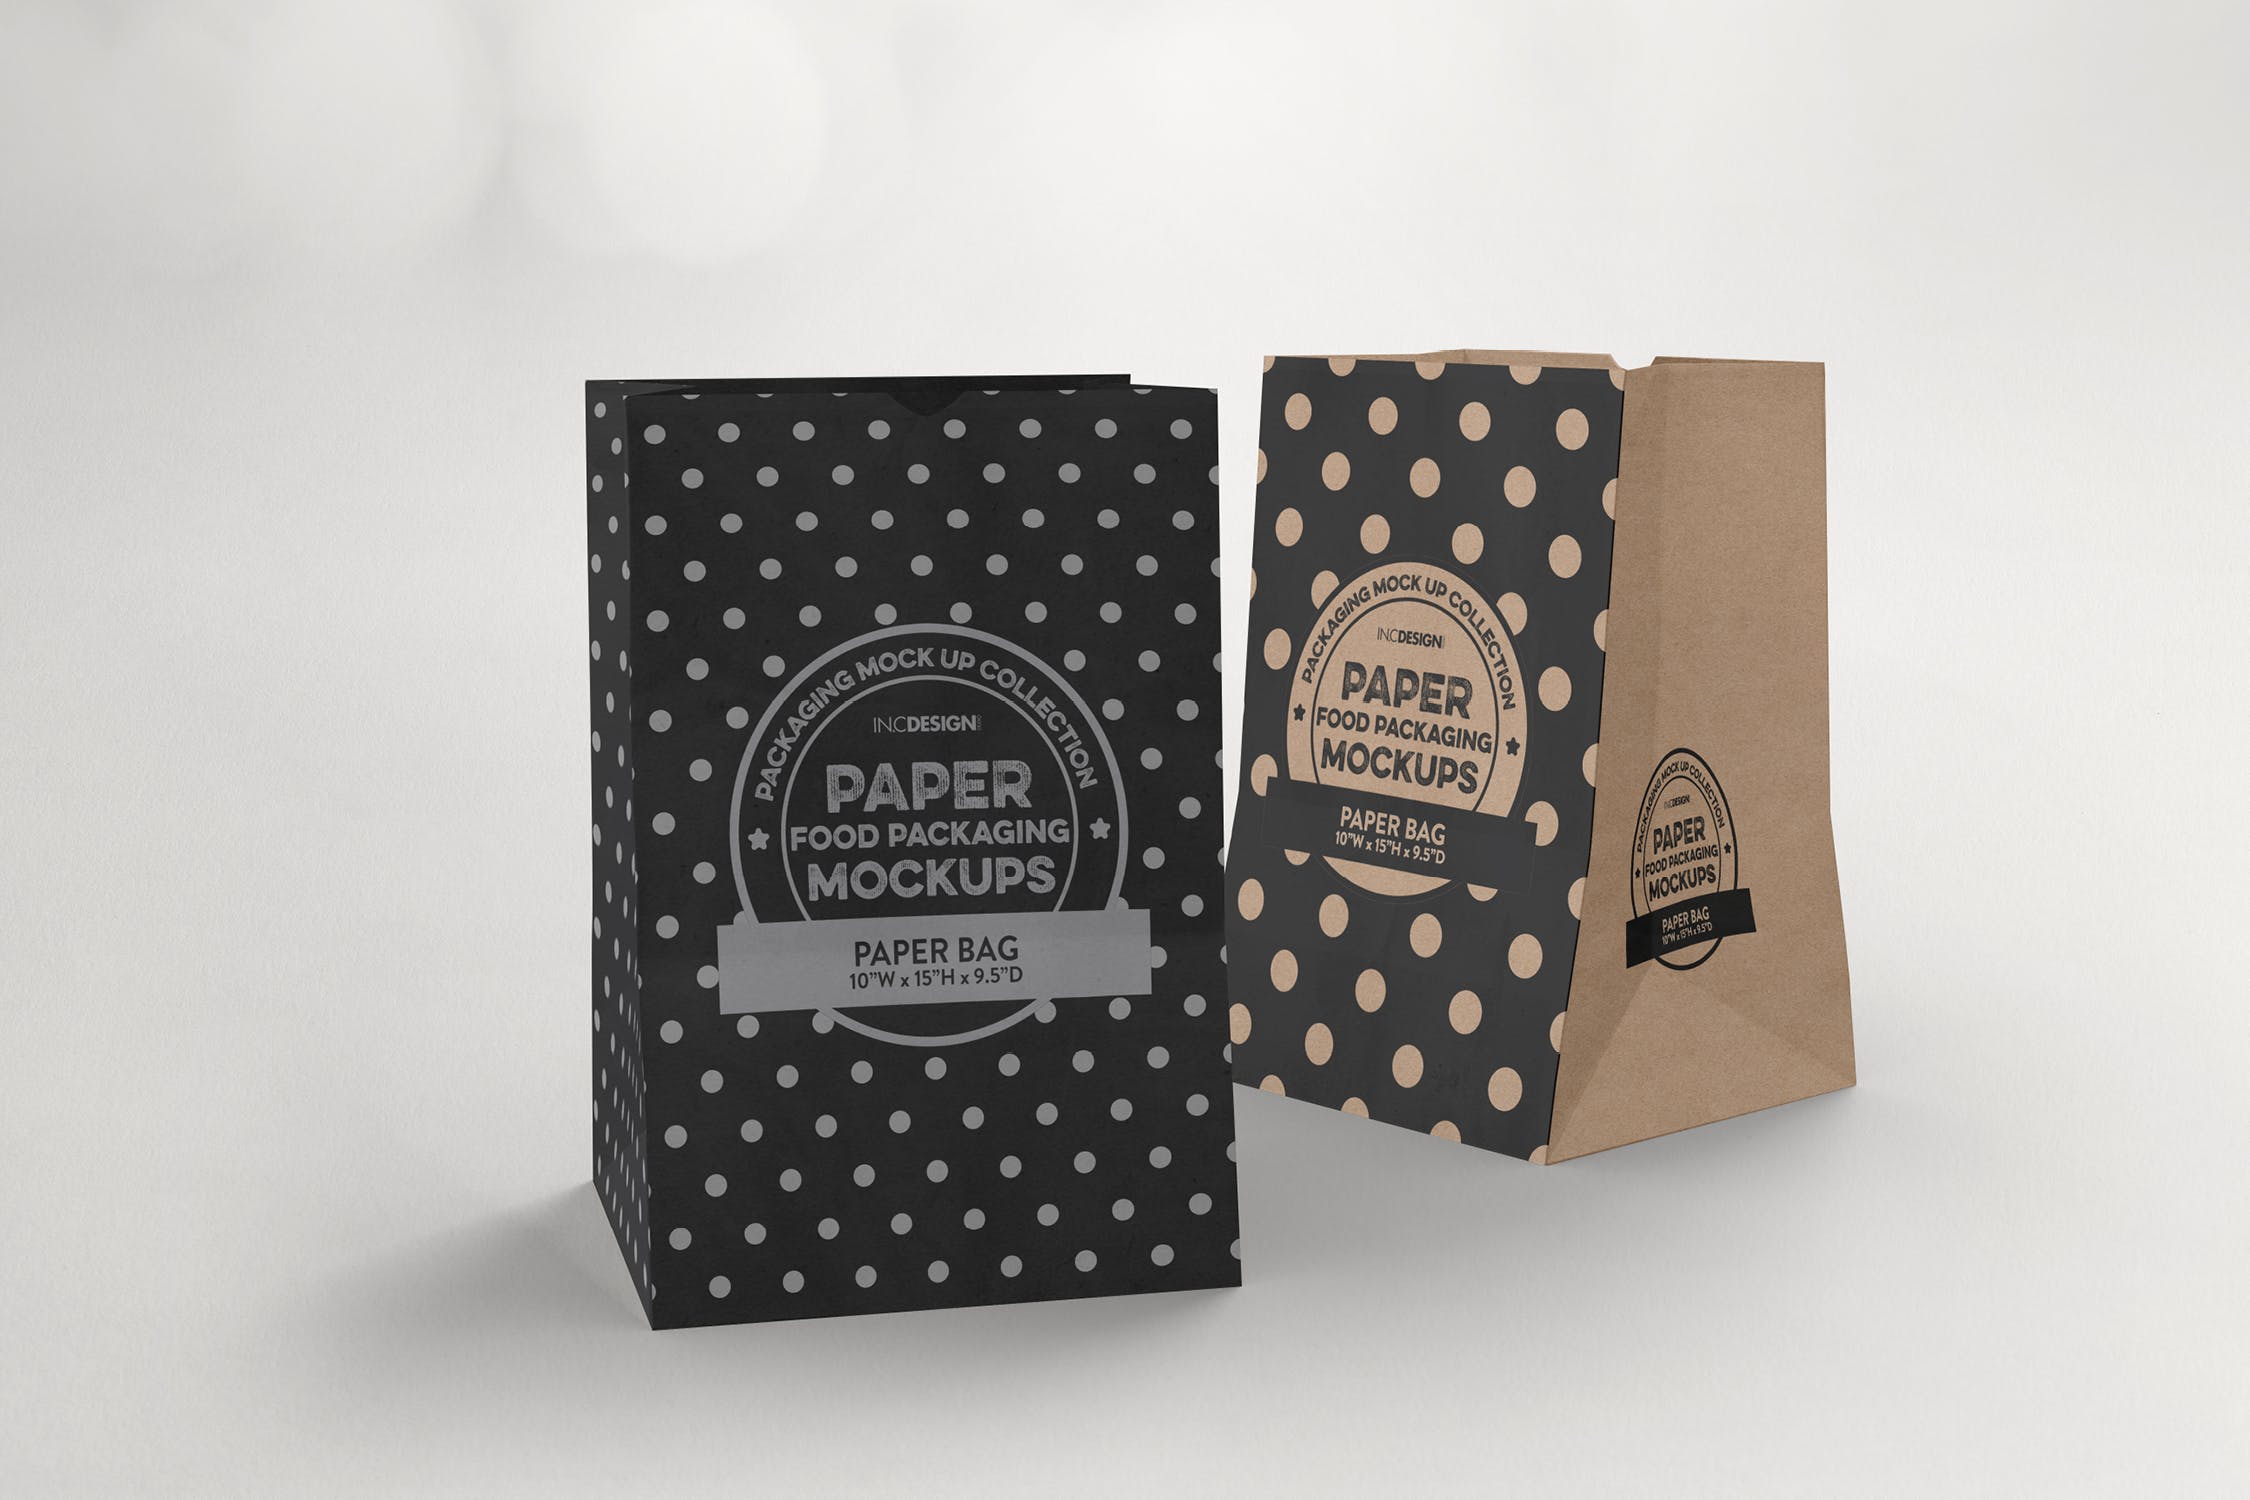 杂货纸袋包装设计效果图第一素材精选 Grocery Paper Bags Packaging Mockup插图(2)